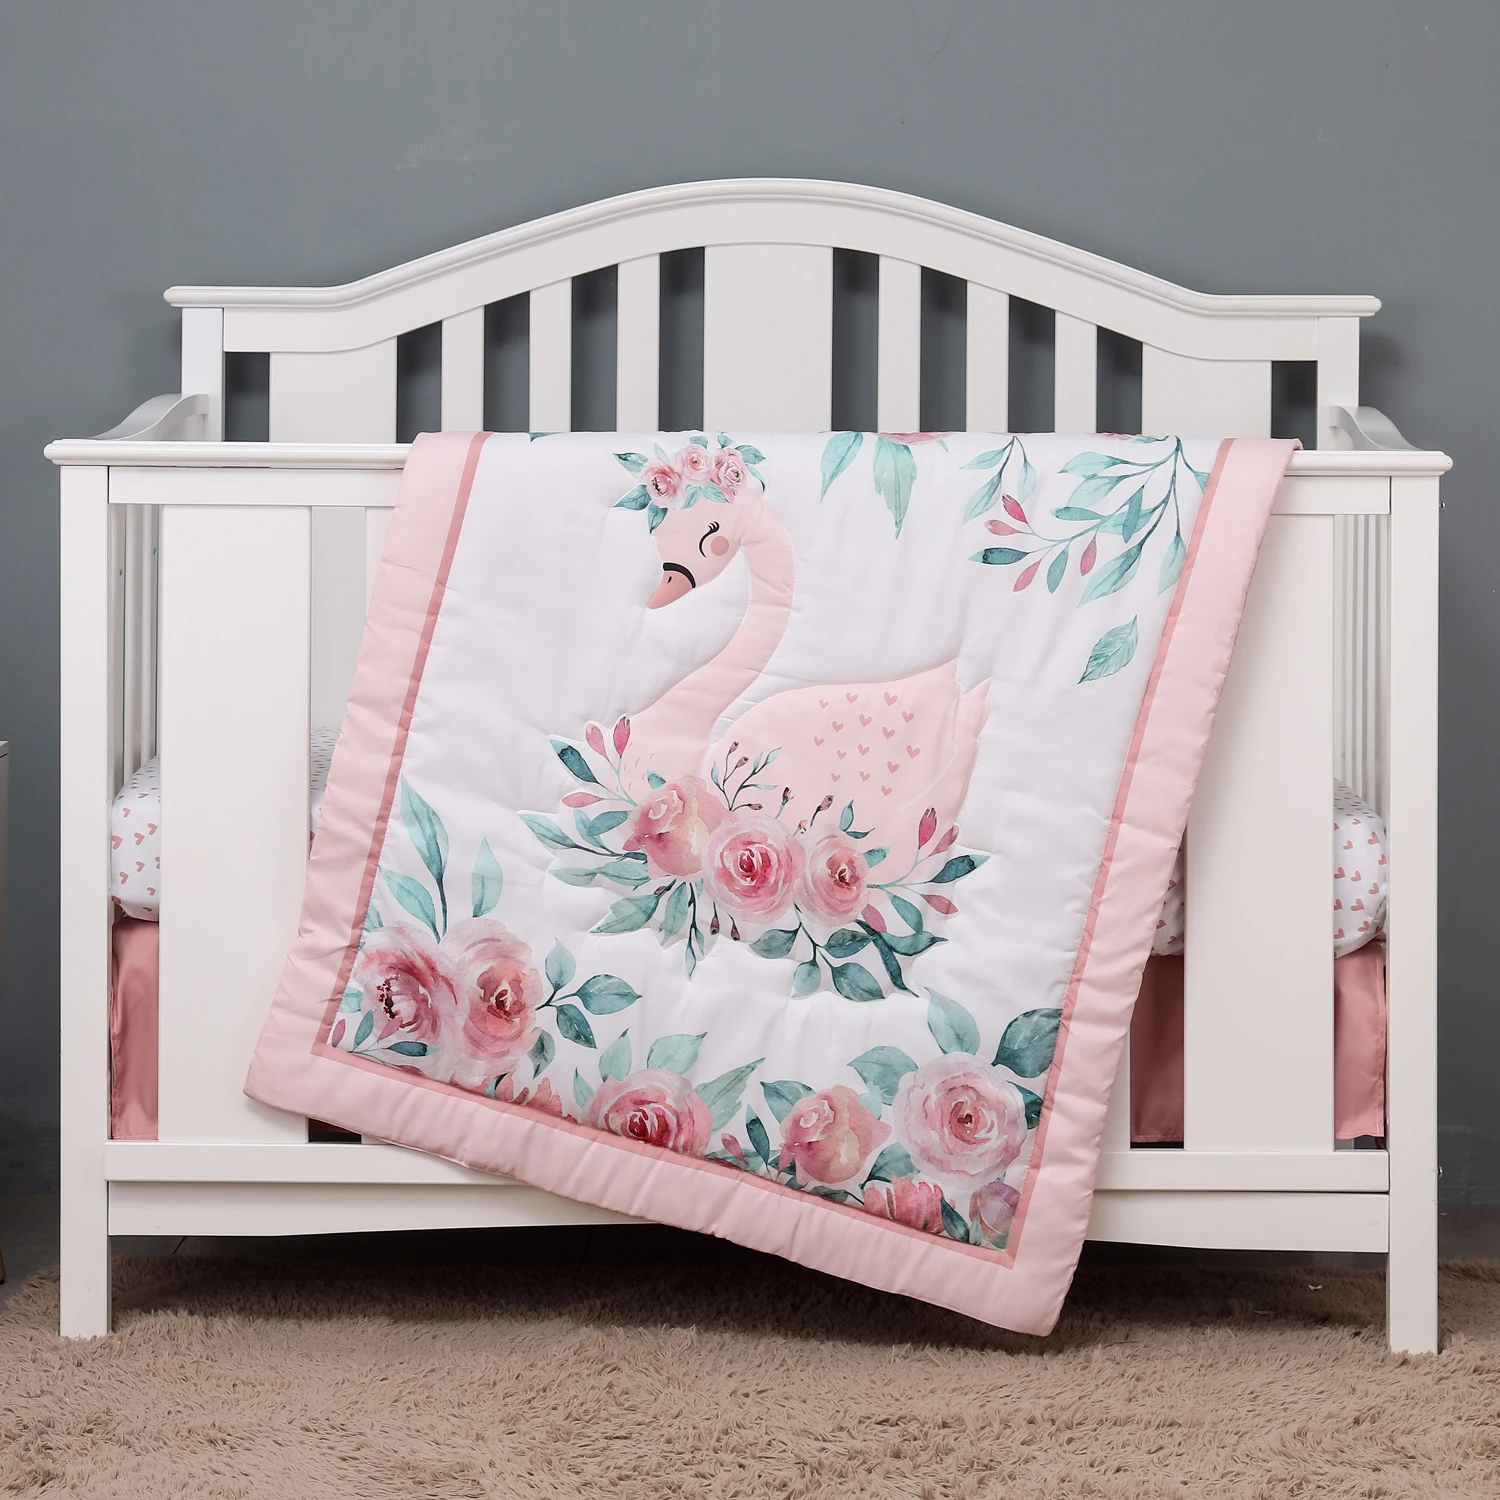 3pcs micro fiber brushed Baby Crib Bedding Set swan and flower design for Girls hot sale including quilt, crib sheet, crib skirt